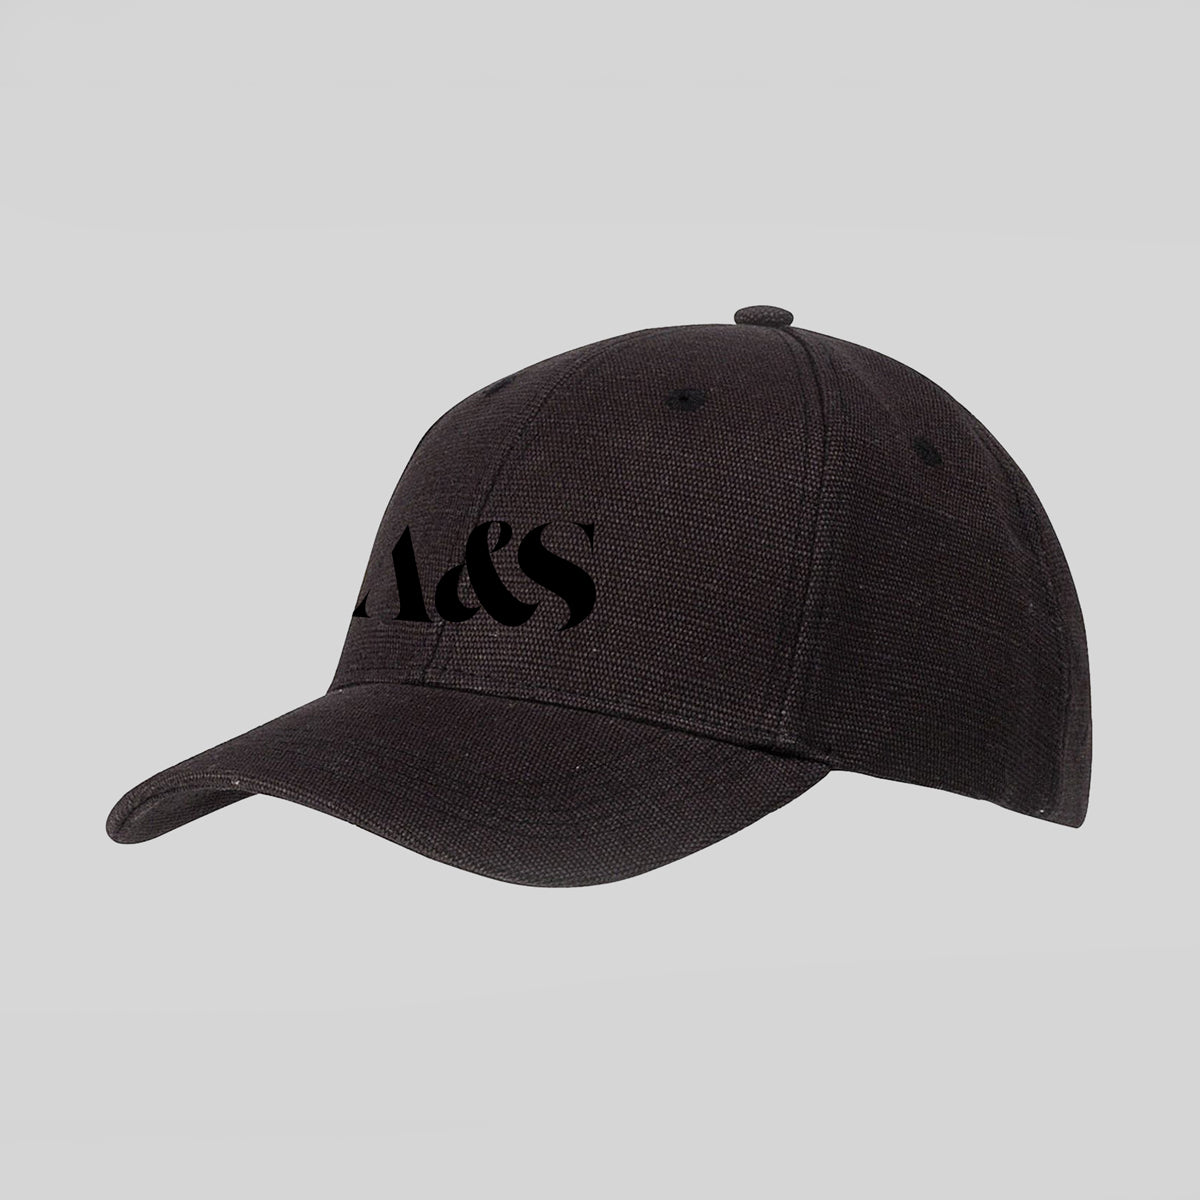 Atlas & Scout - Blackout hemp baseball cap